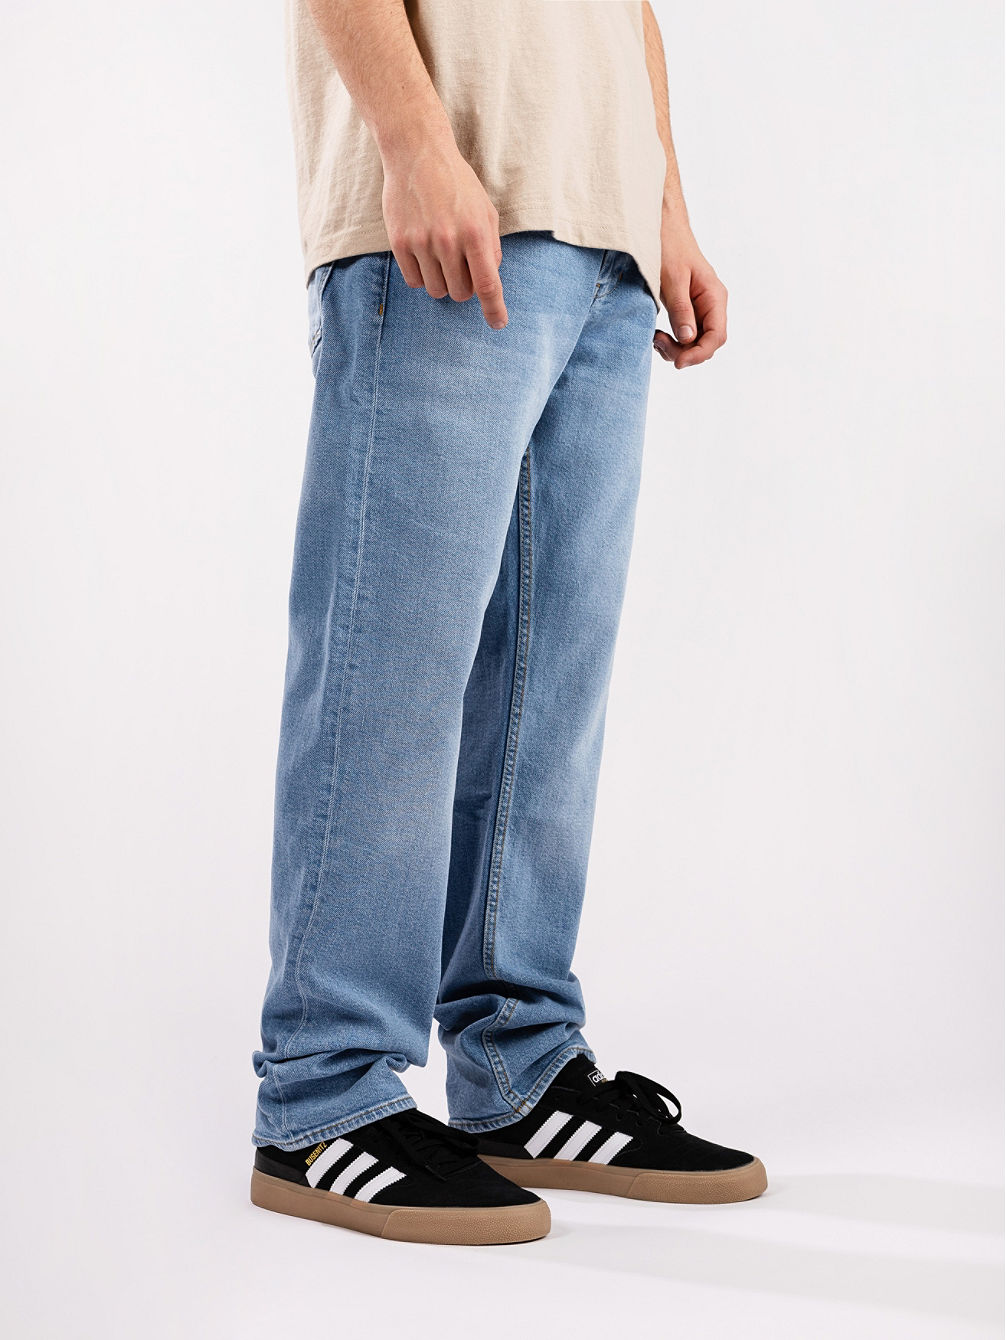 Lowfly 2 Jeans